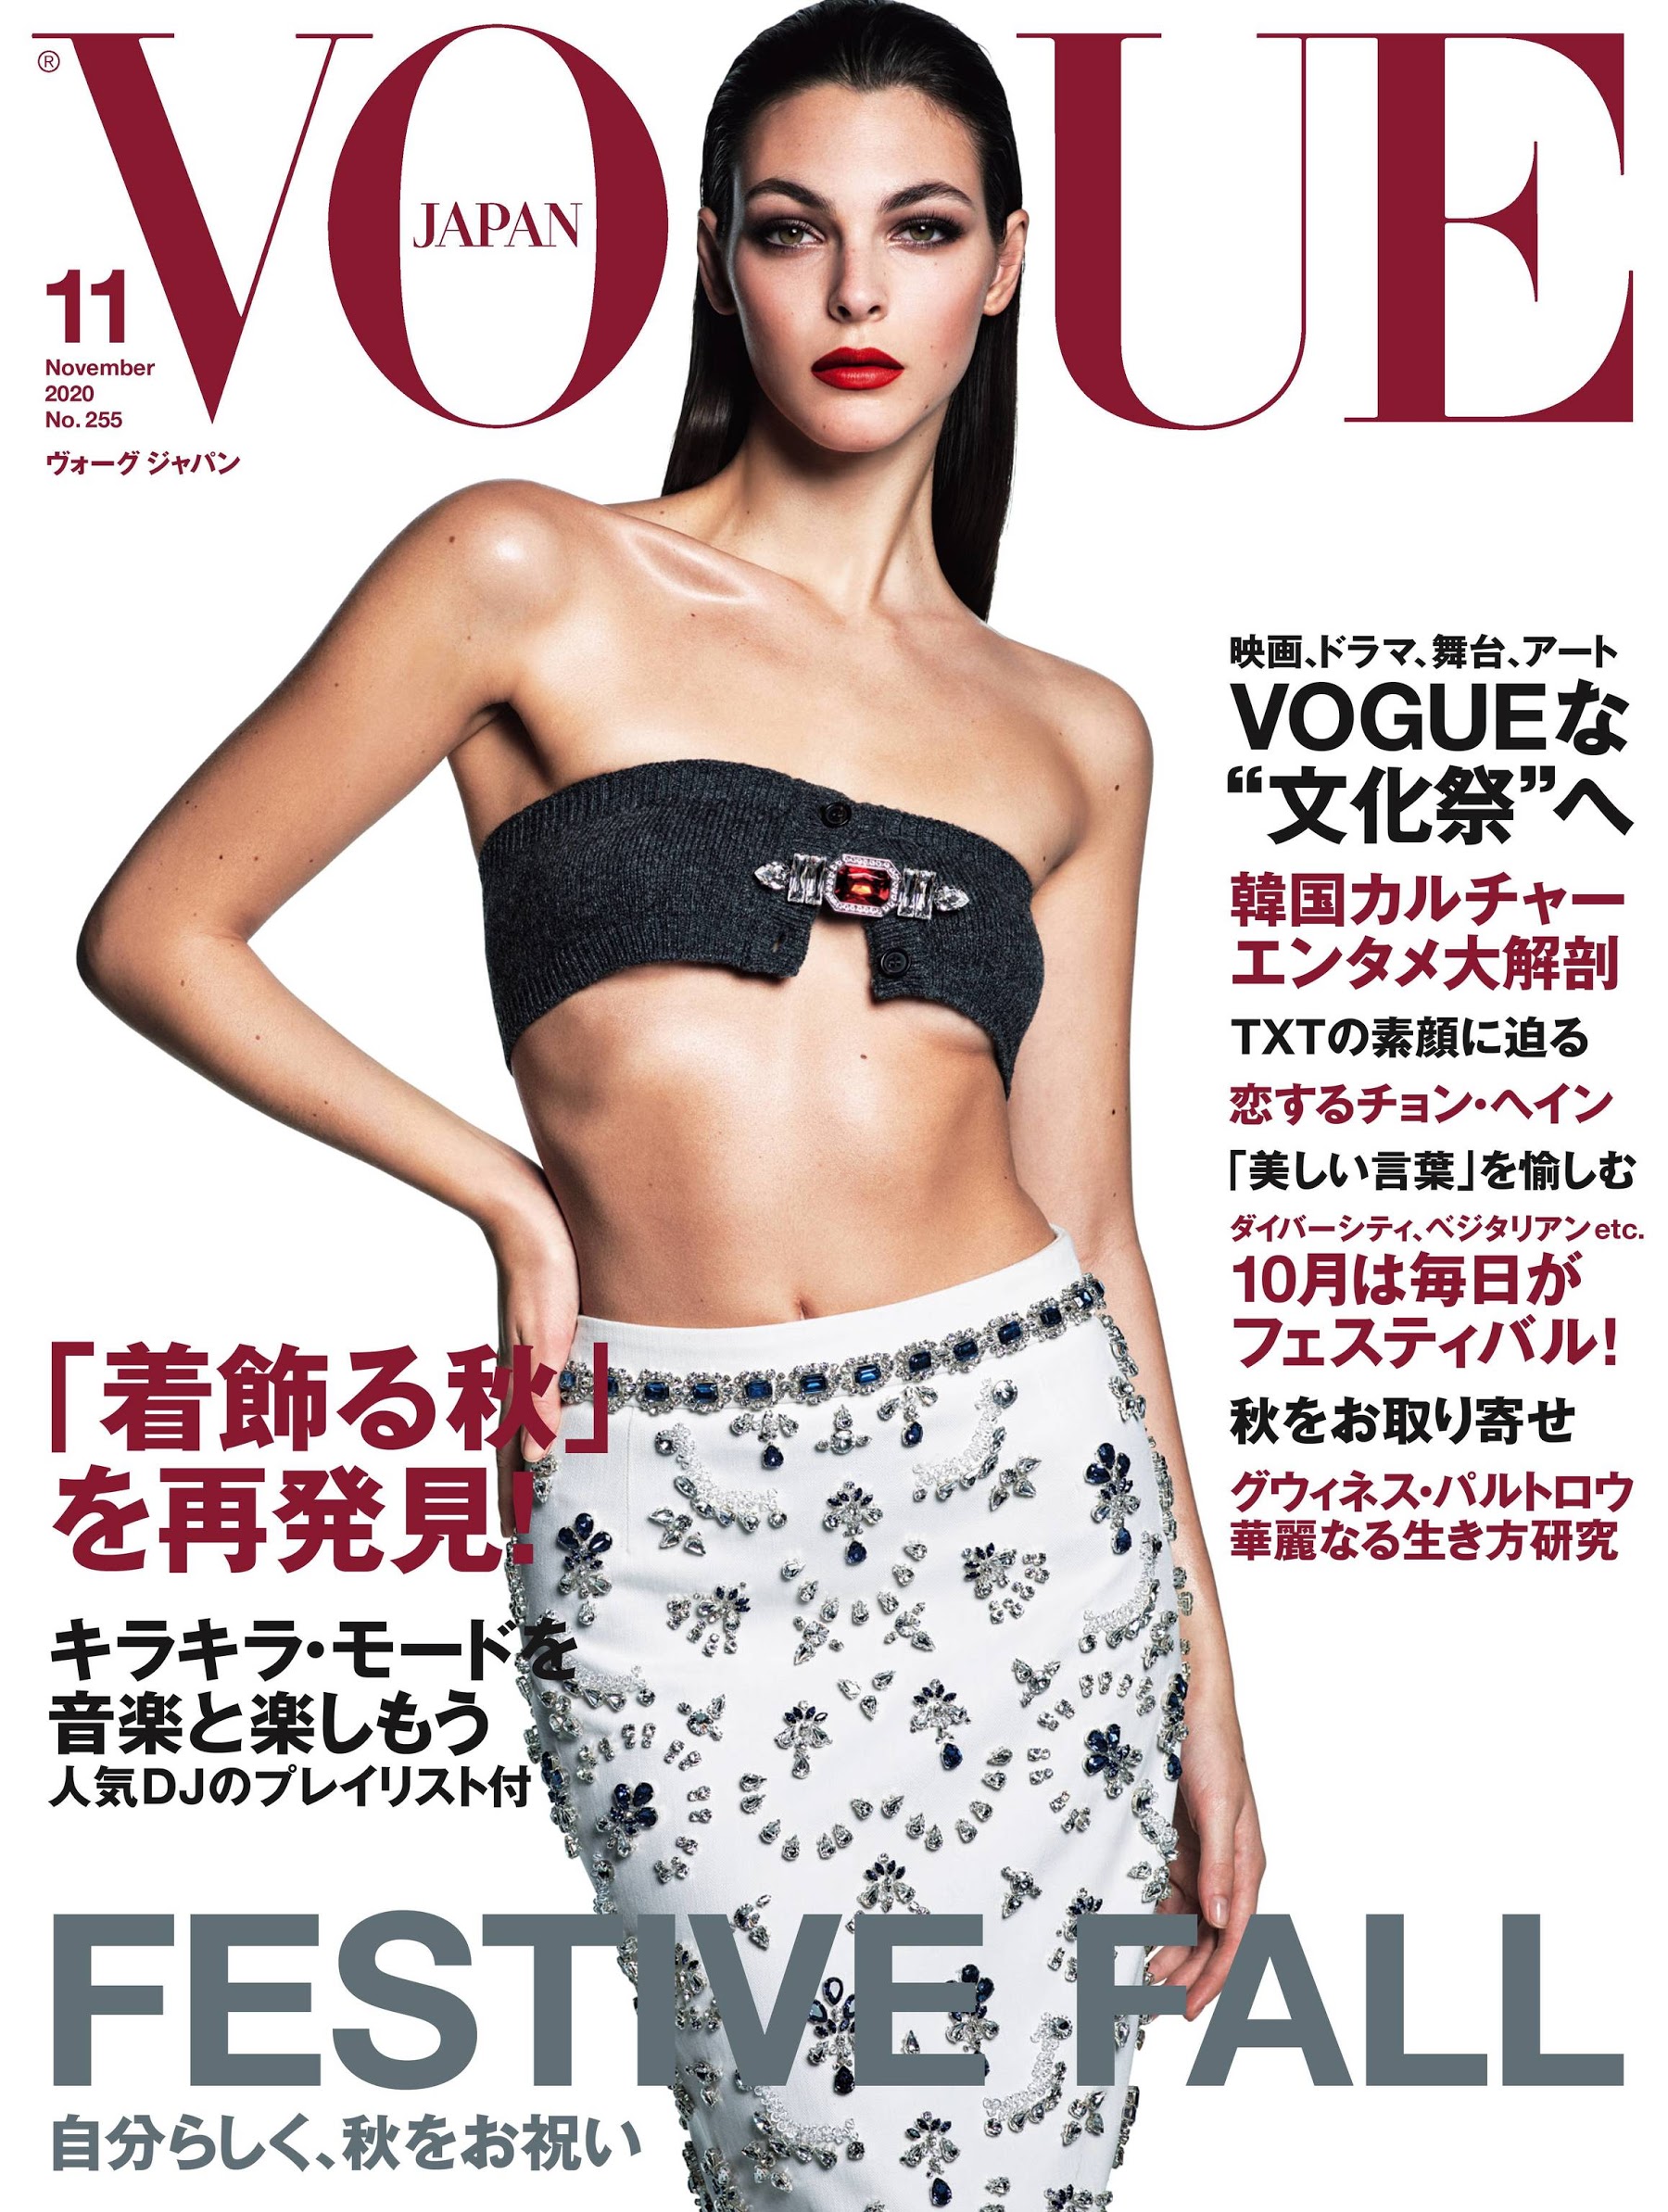 Vogue Japan November 2020 Cover Story Editorial